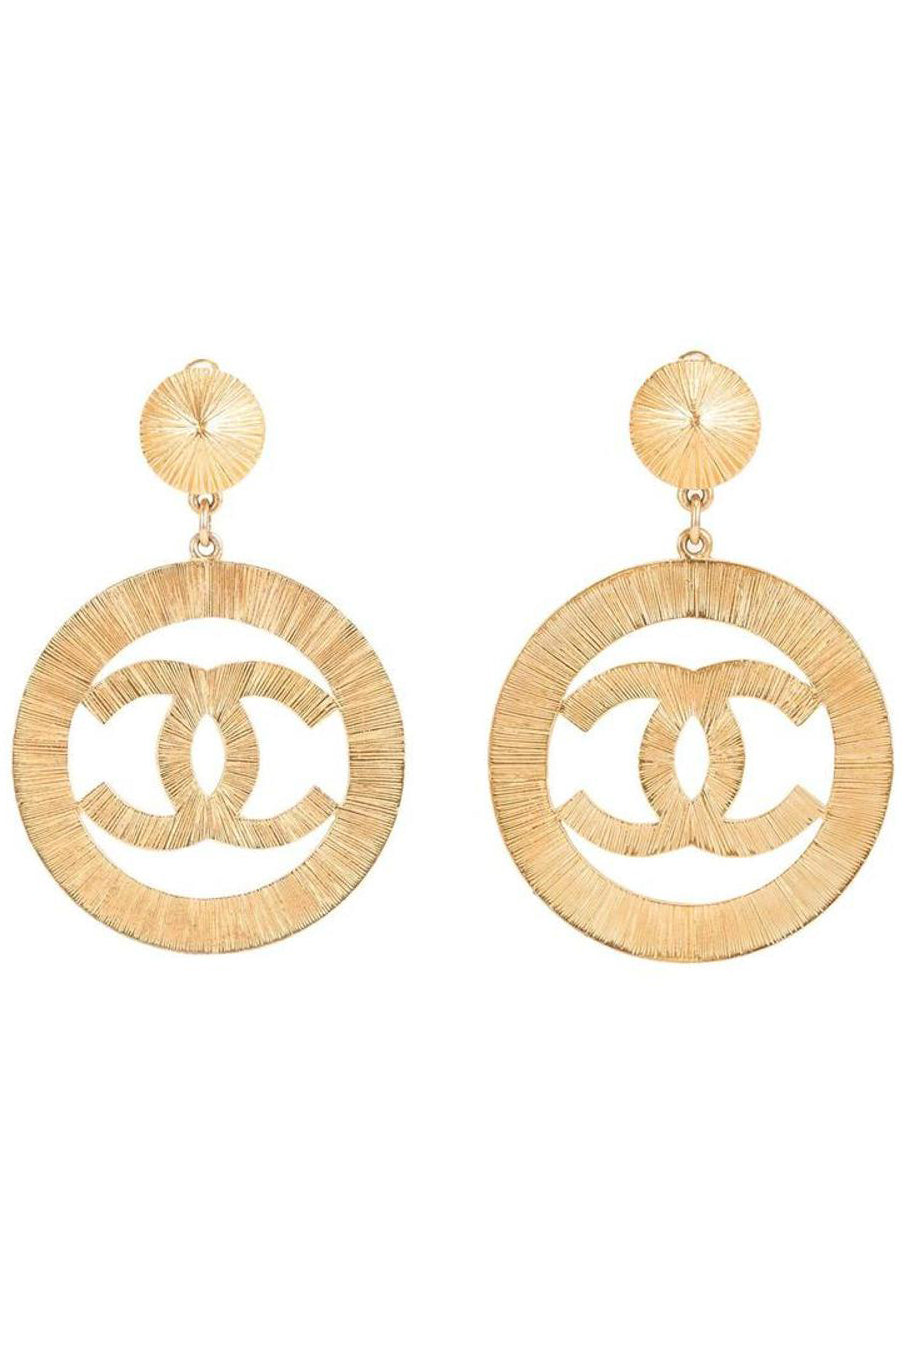 Chanel Gold Tone CC Logo Dangle Hoop Earrings, Chanel